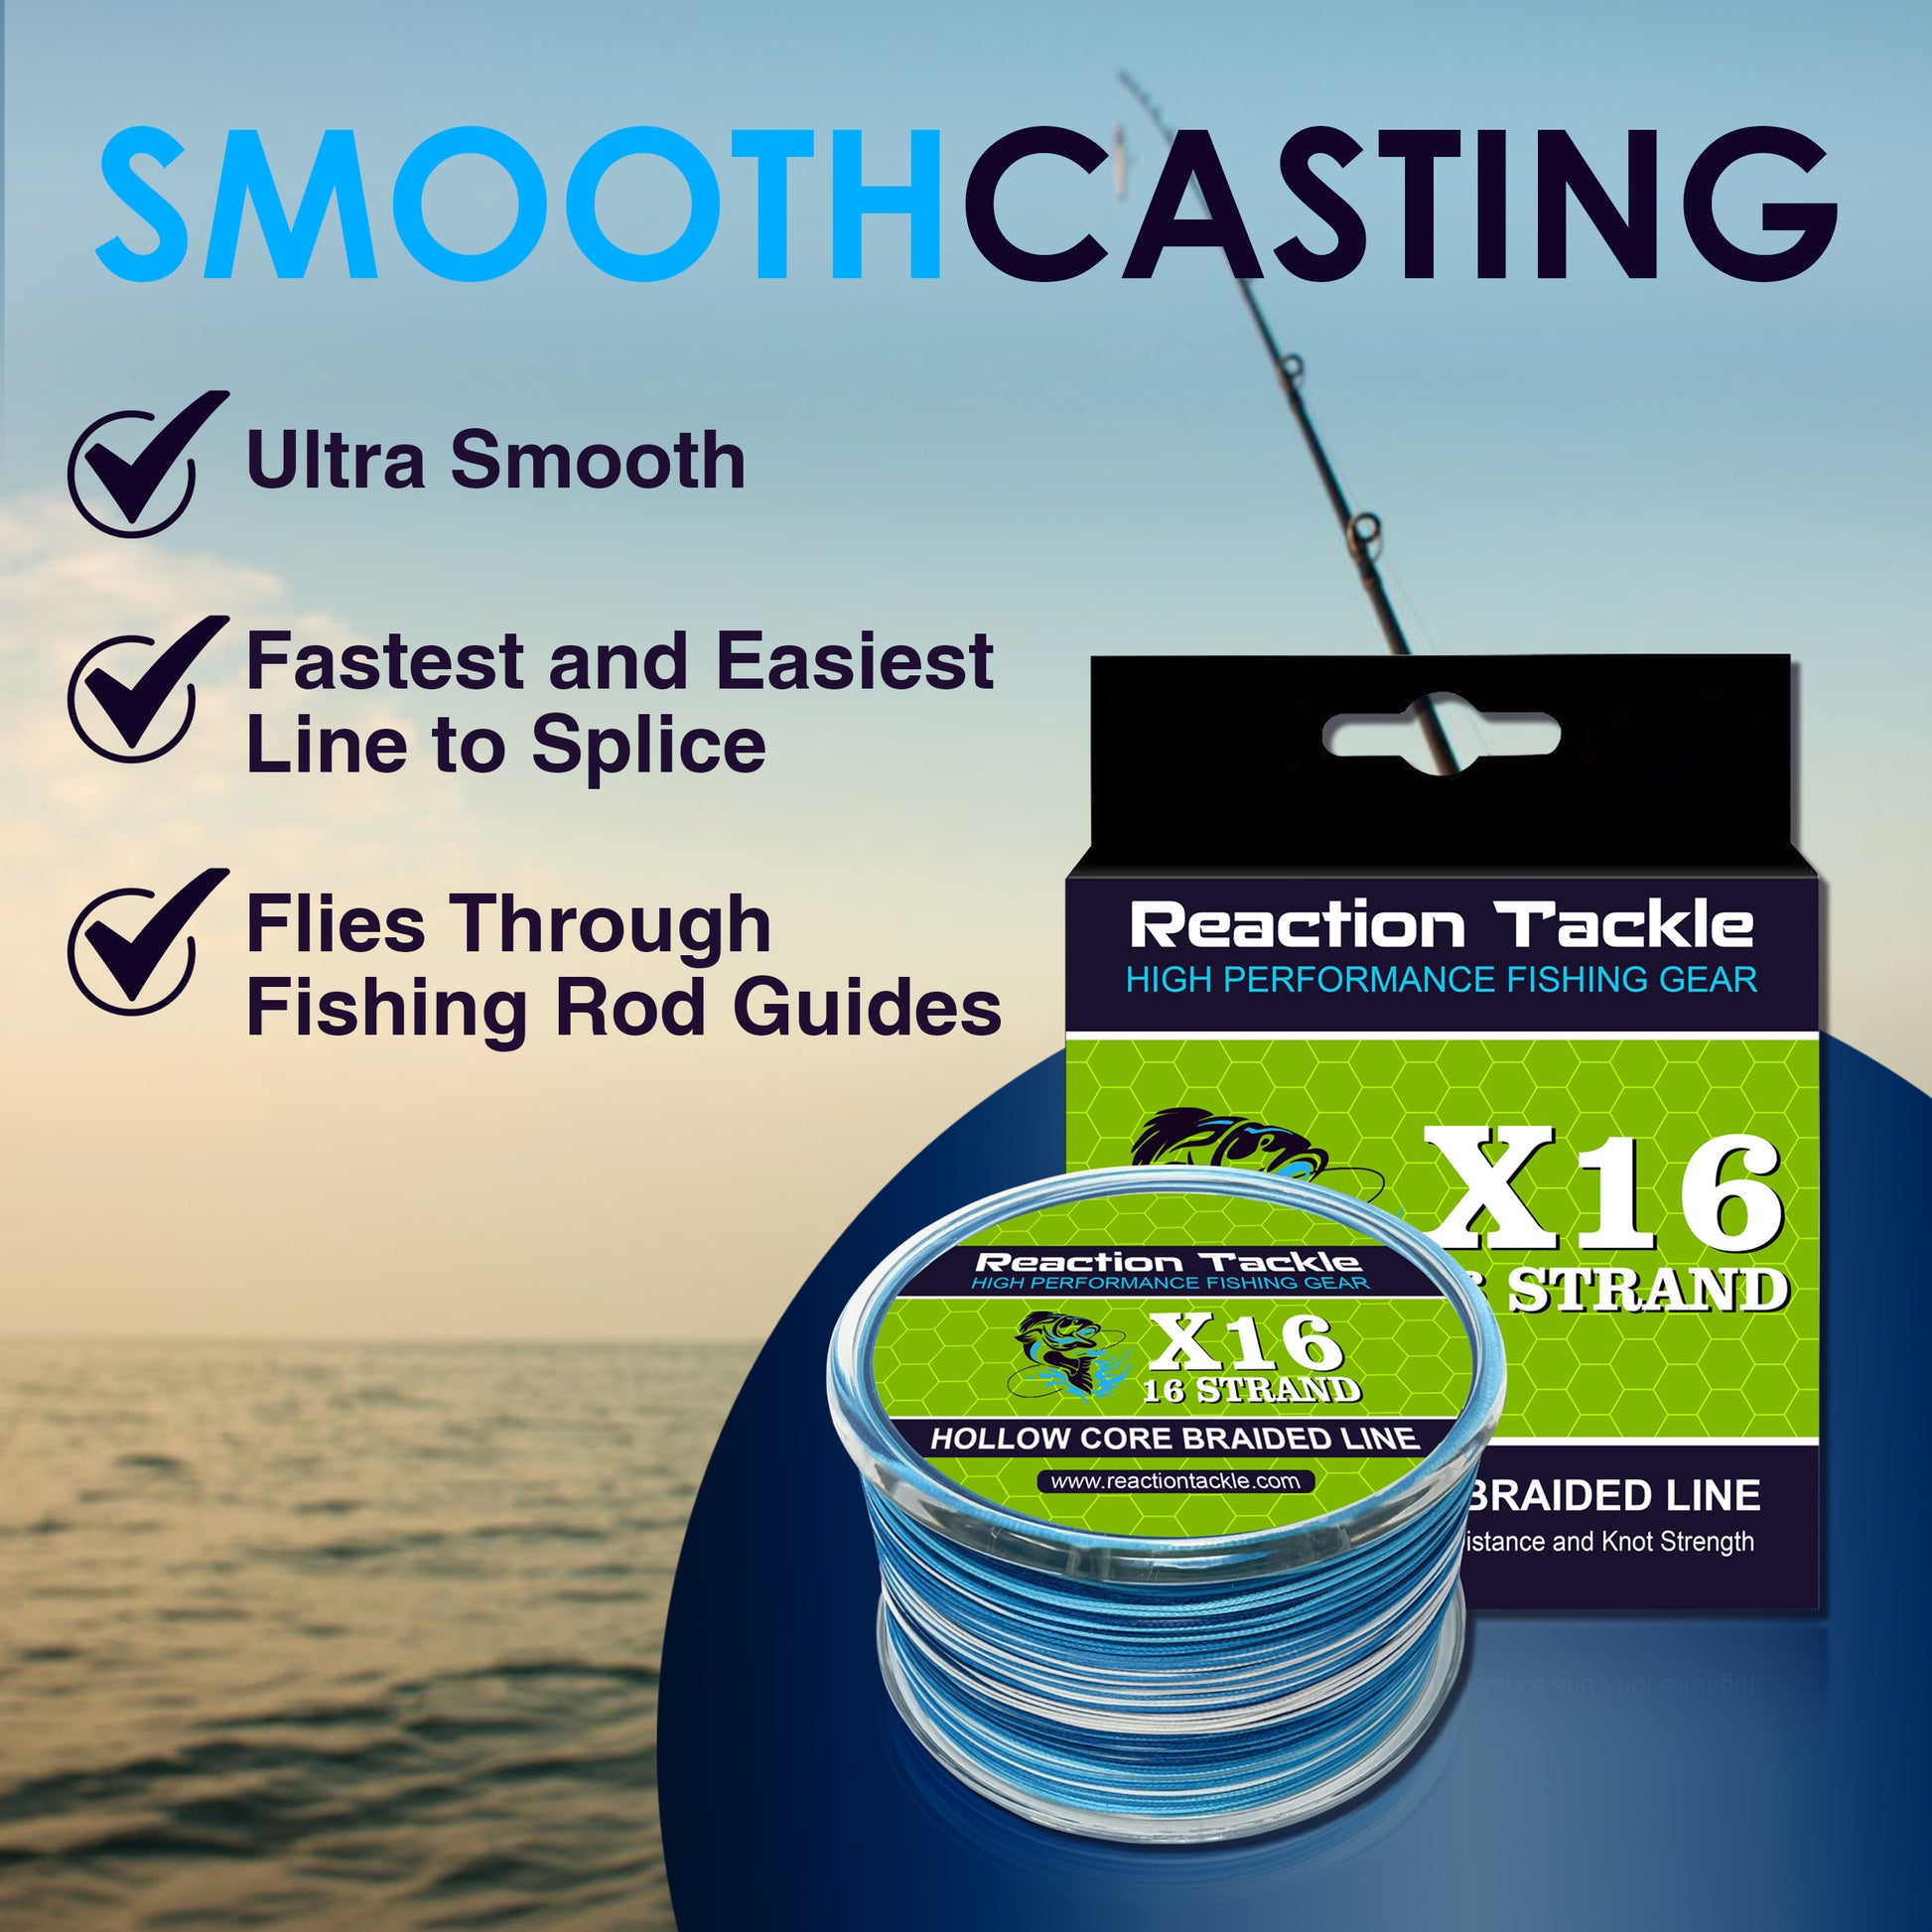 Reaction Tackle Nylon Monofilament Fishing Line- 1 Pound Jumbo Spools